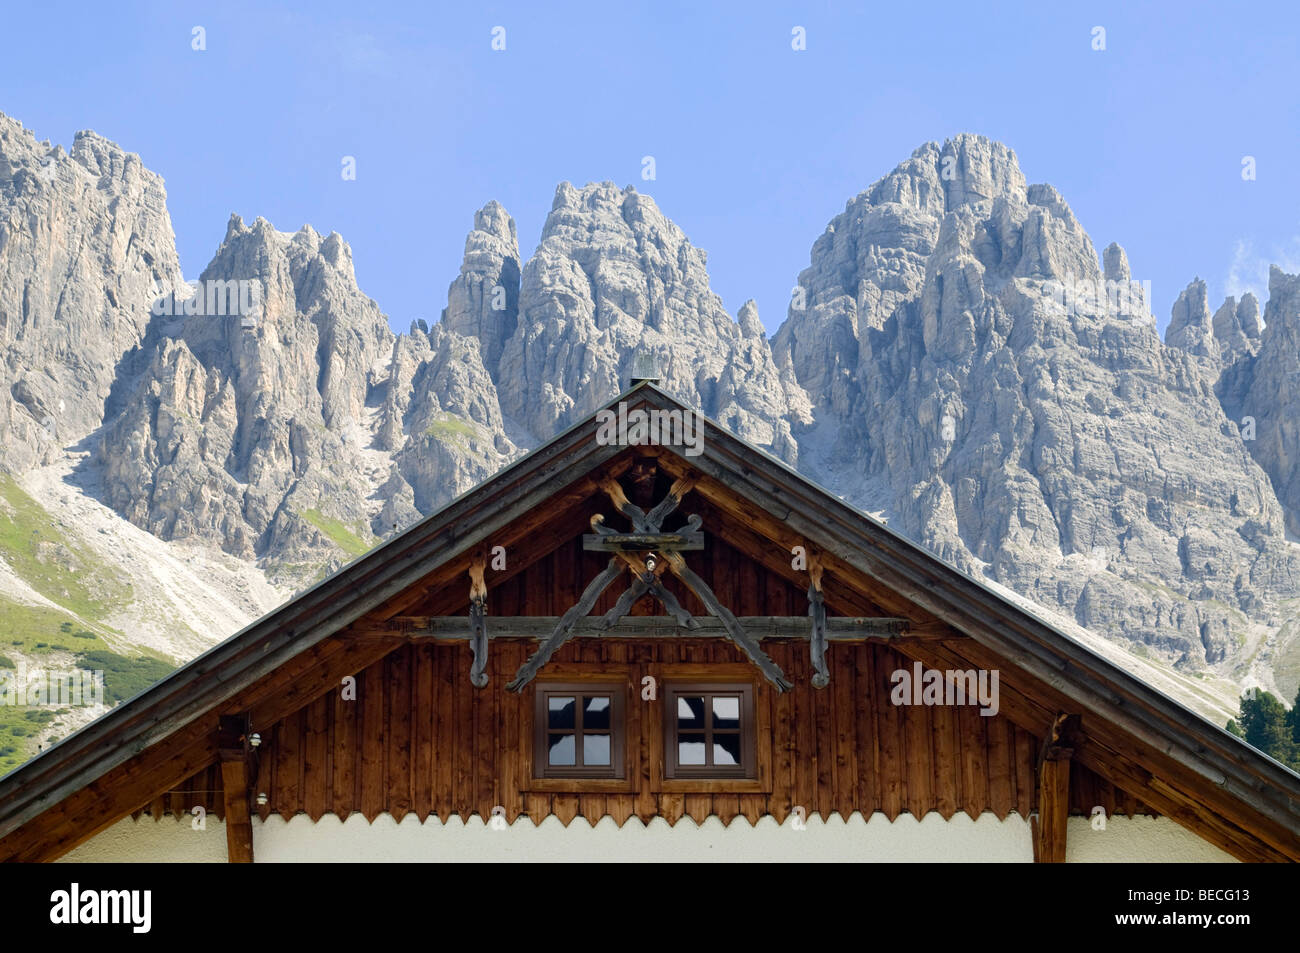 Gable of an alpine building, Kalkkoegel mountain chain at back, Kematen alp, Axams, Tyrol, Austria, Europe Stock Photo